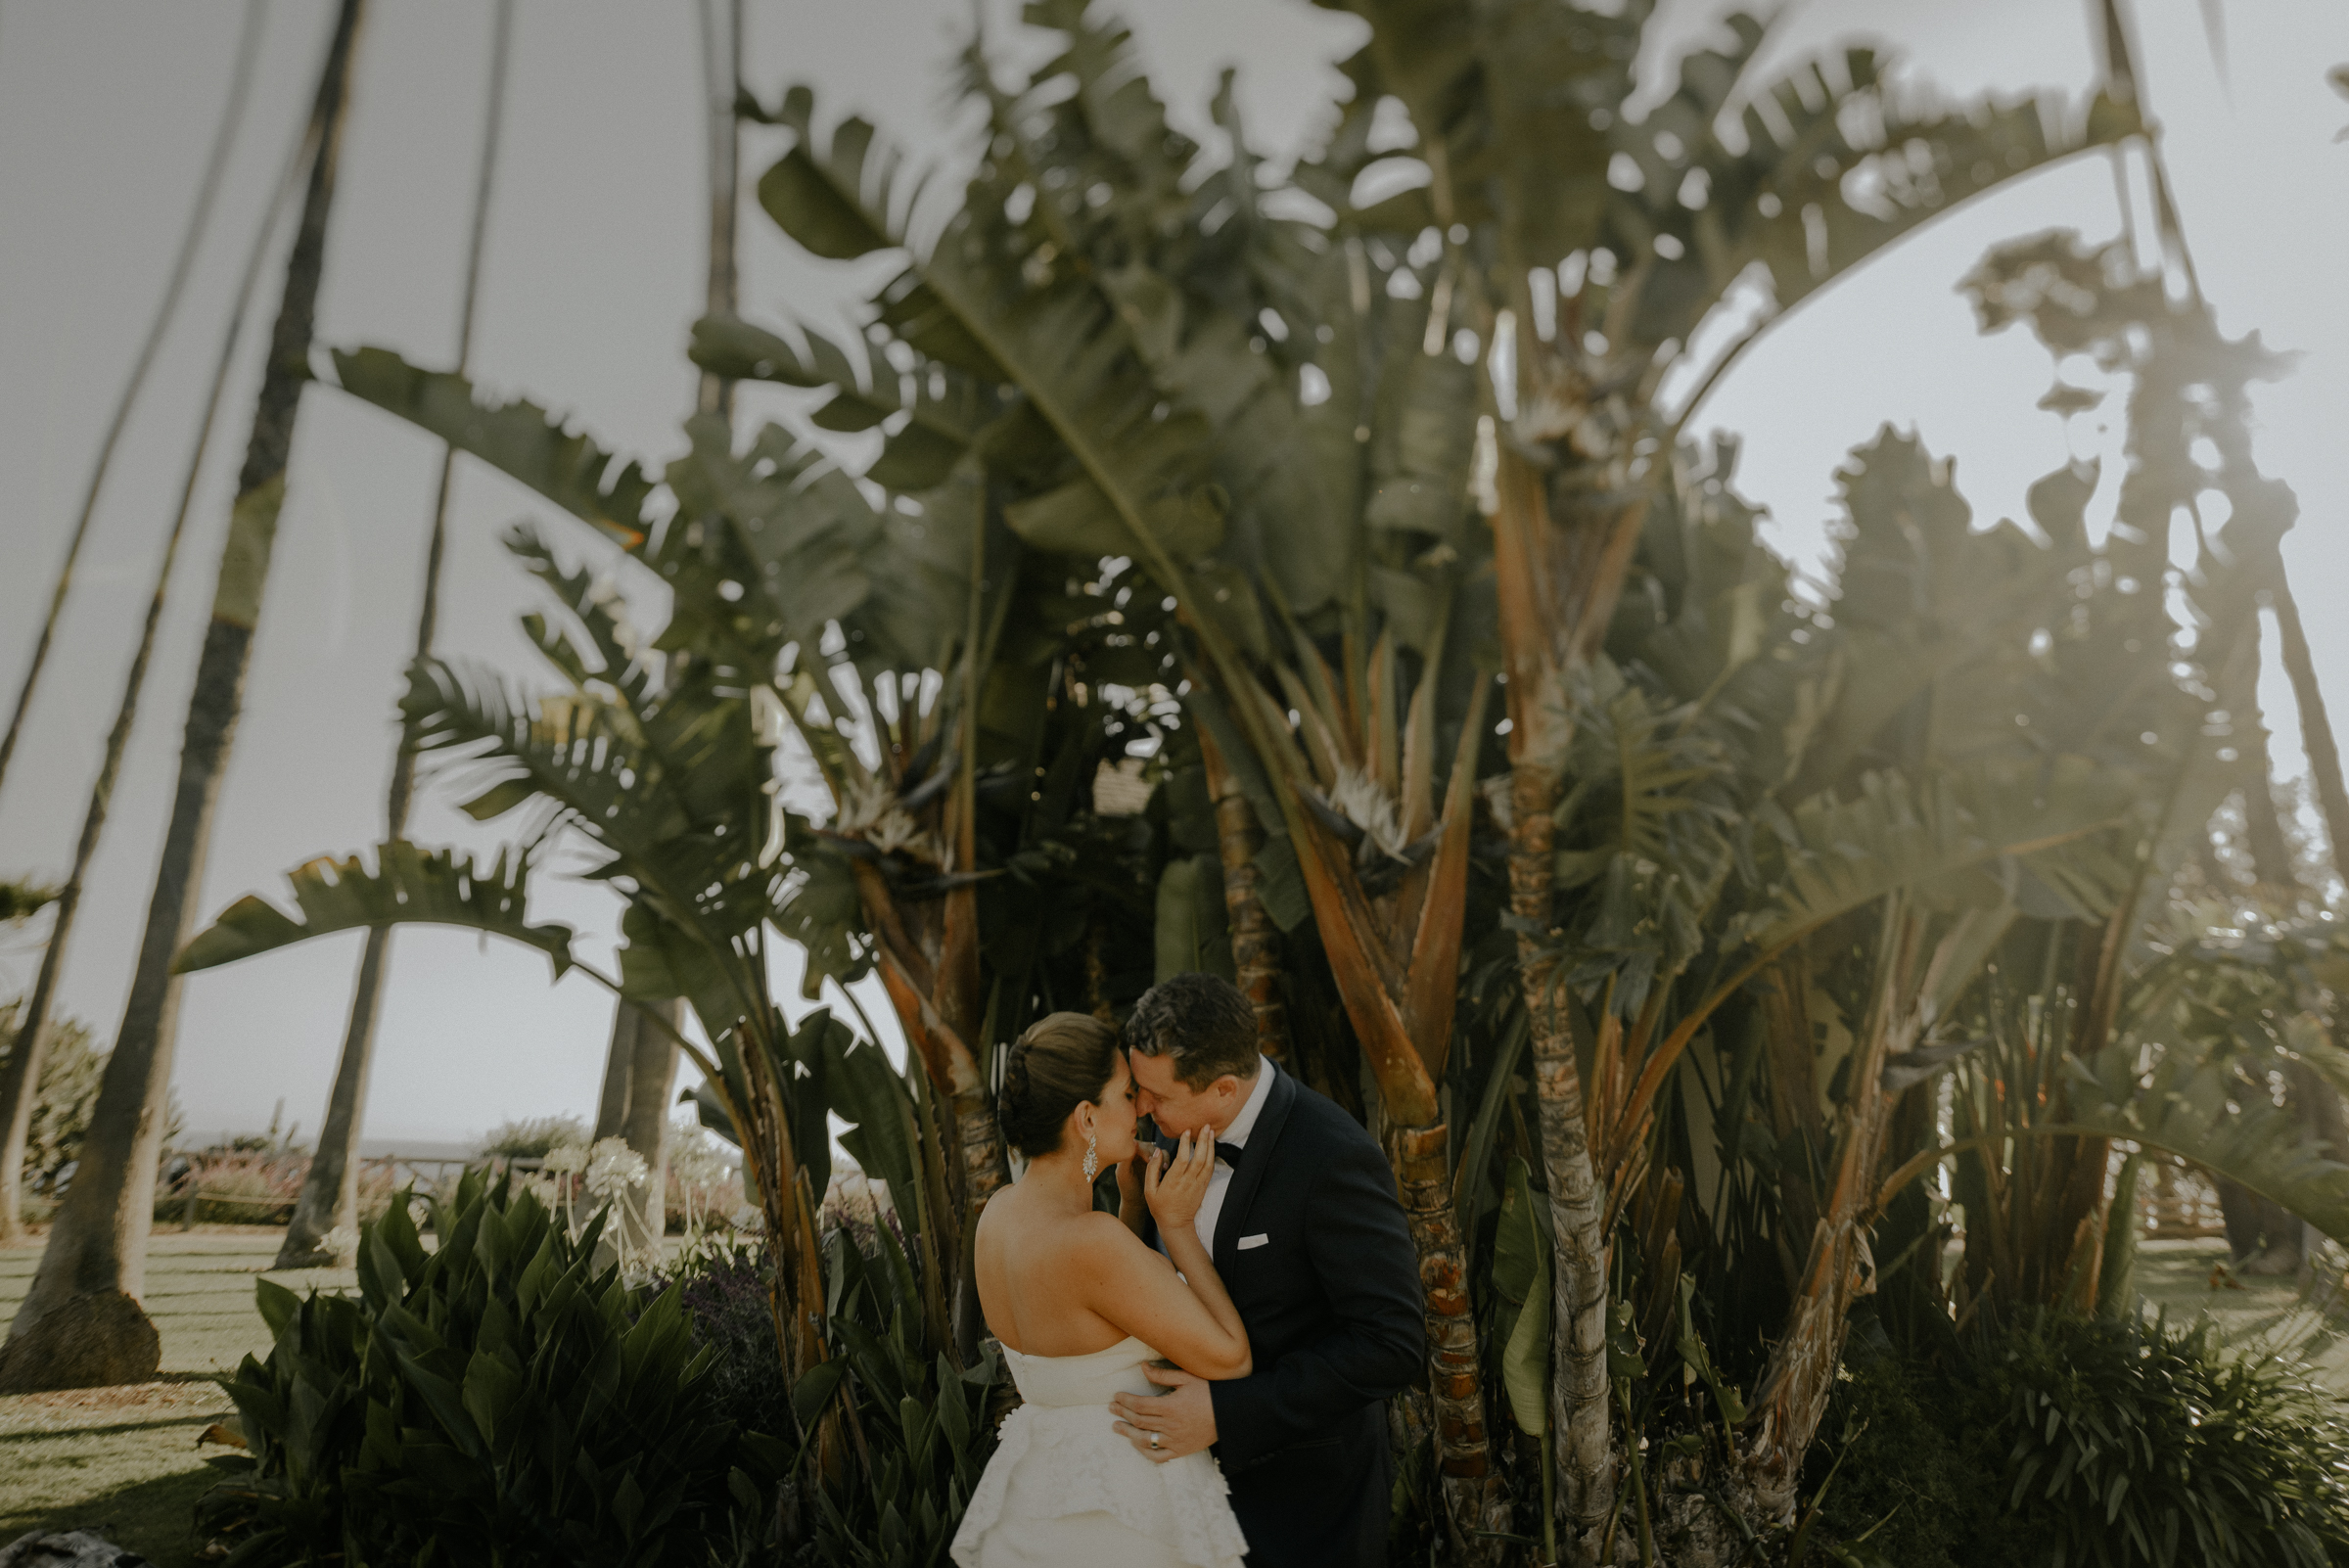 los angeles wedding photography - L.A. elopement - santa monica - IsaiahAndTaylor.com-1-4.jpg